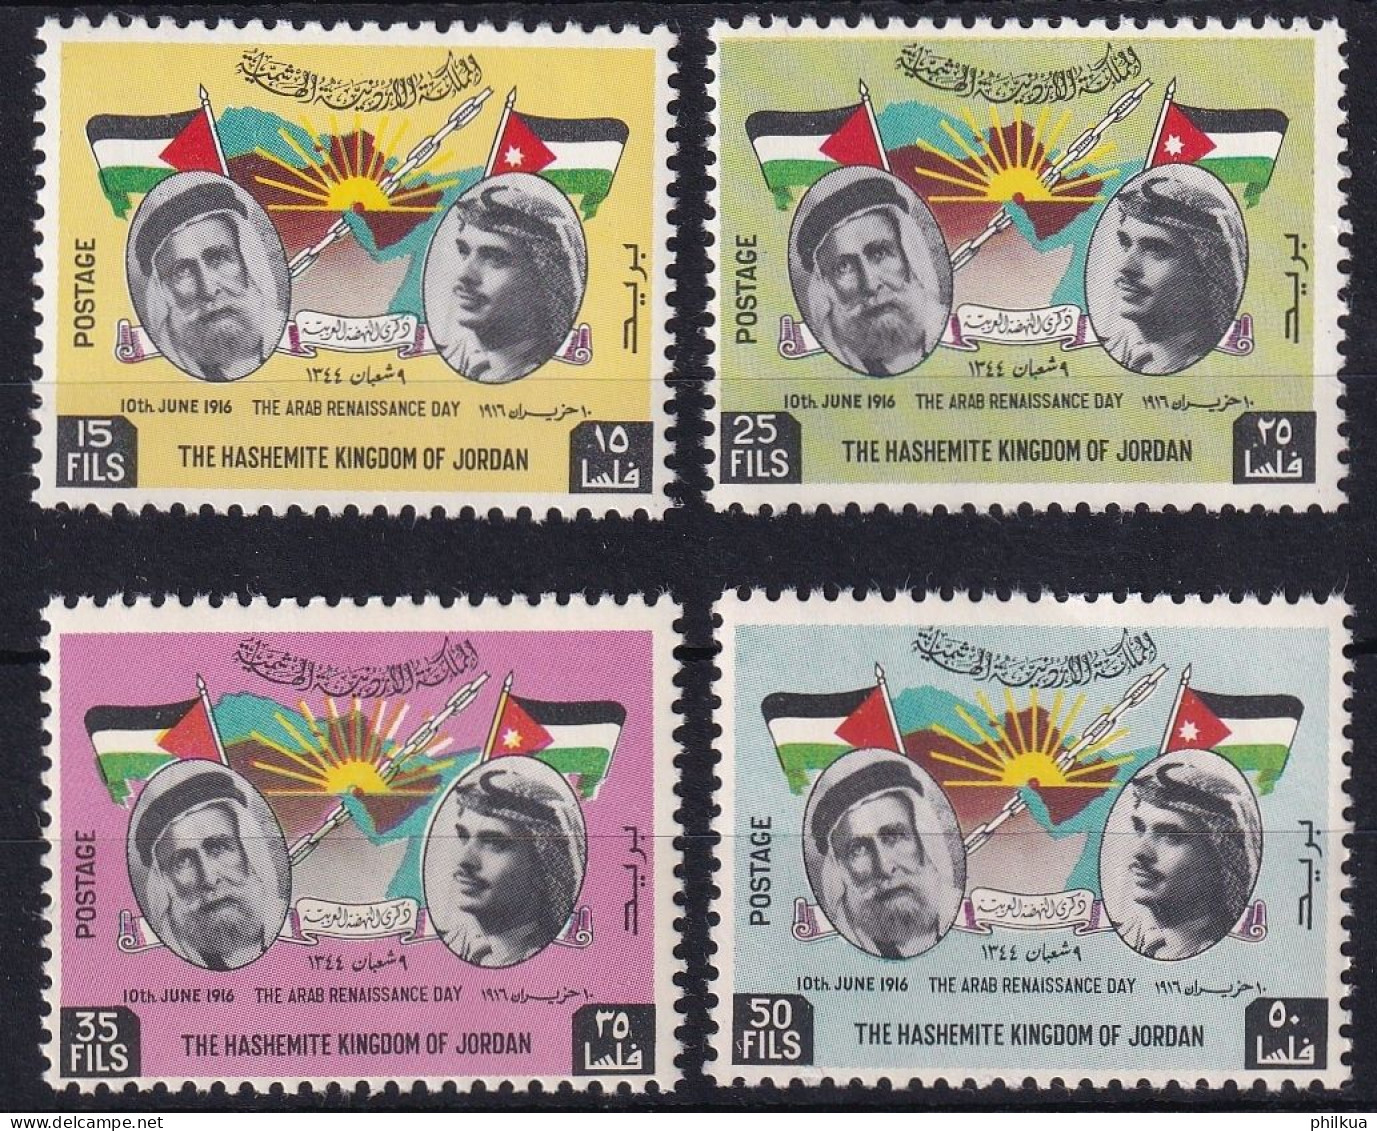 MiNr. 416 - 419 Jordanien 1963, 25. Dez. Tag Der Arabischen Renaissance - Postfrisch/**/MNH - Jordania